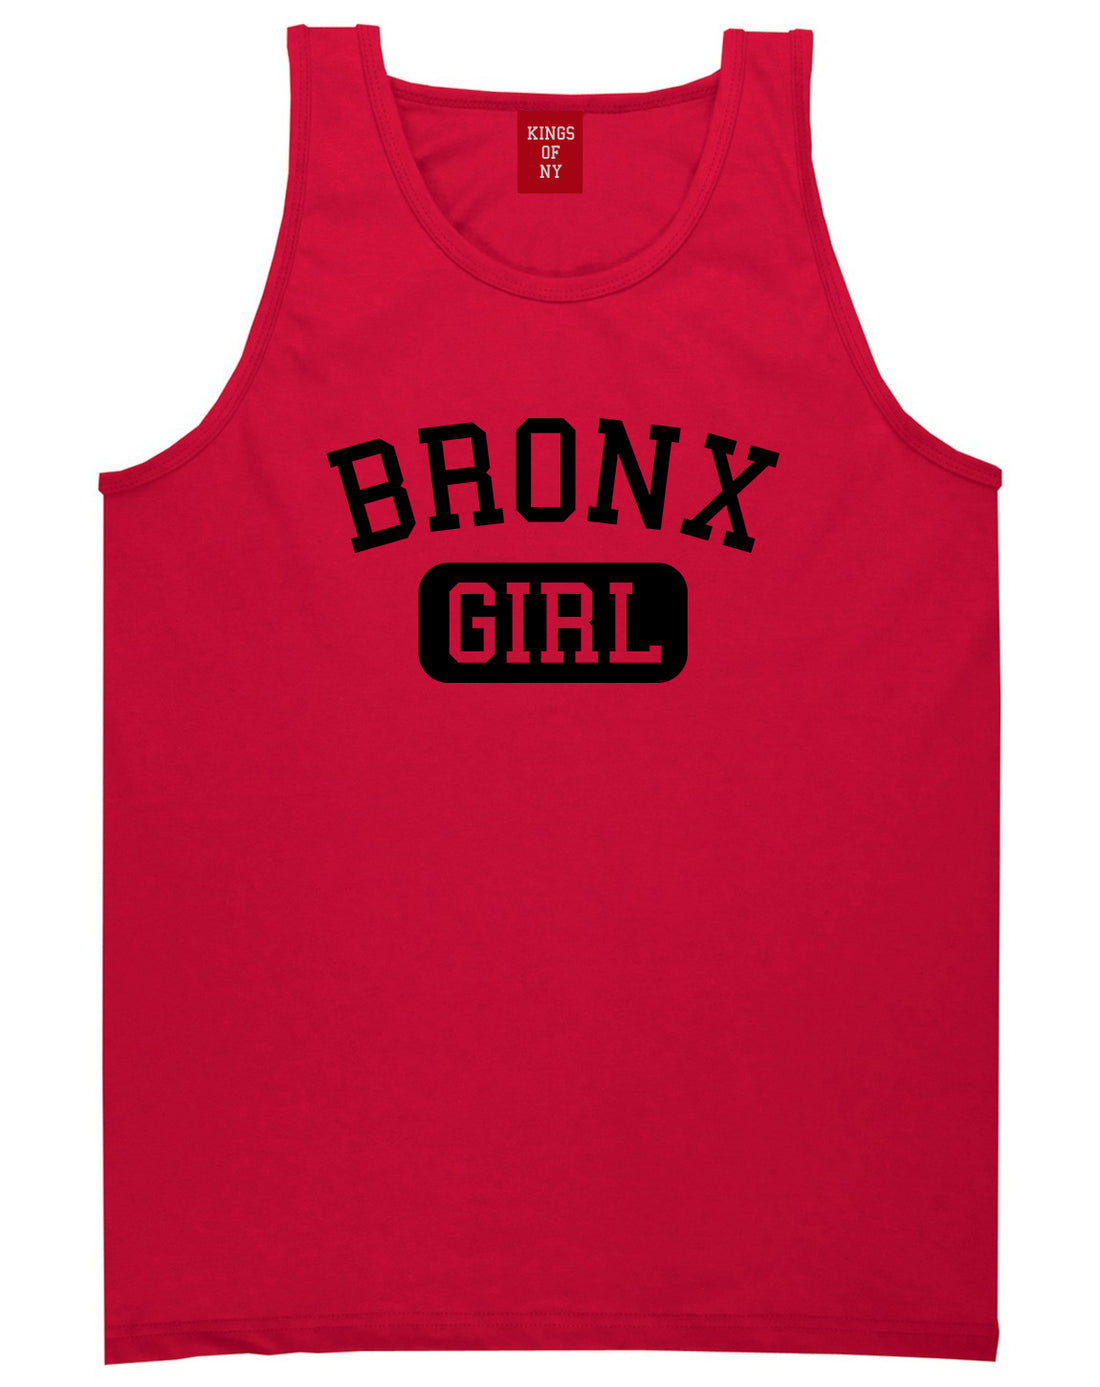 Bronx Girl New York Mens Tank Top T-Shirt Red